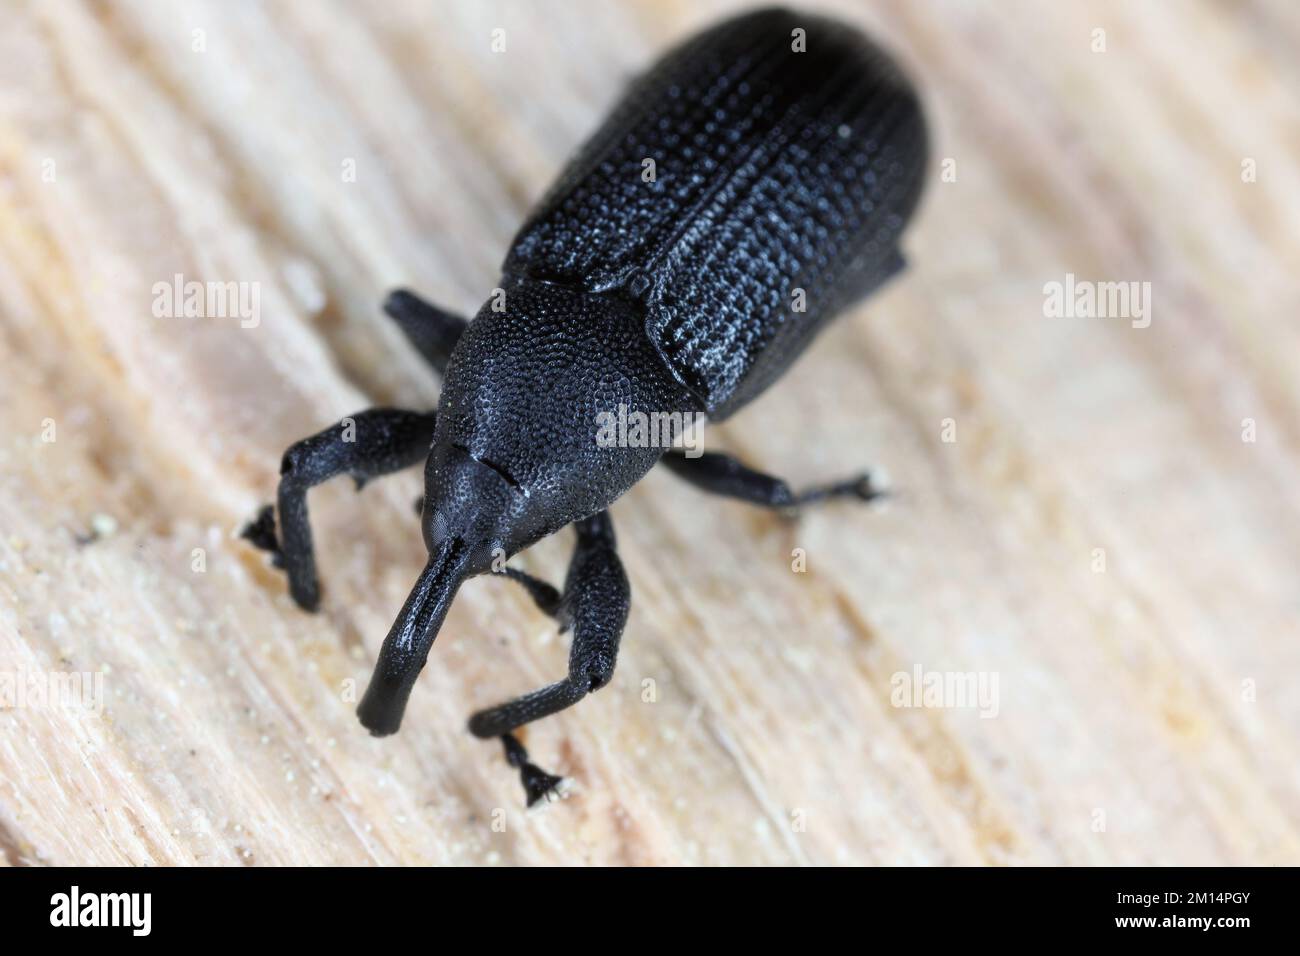 Magdalis common black weevil. Beetle on wood. Stock Photo